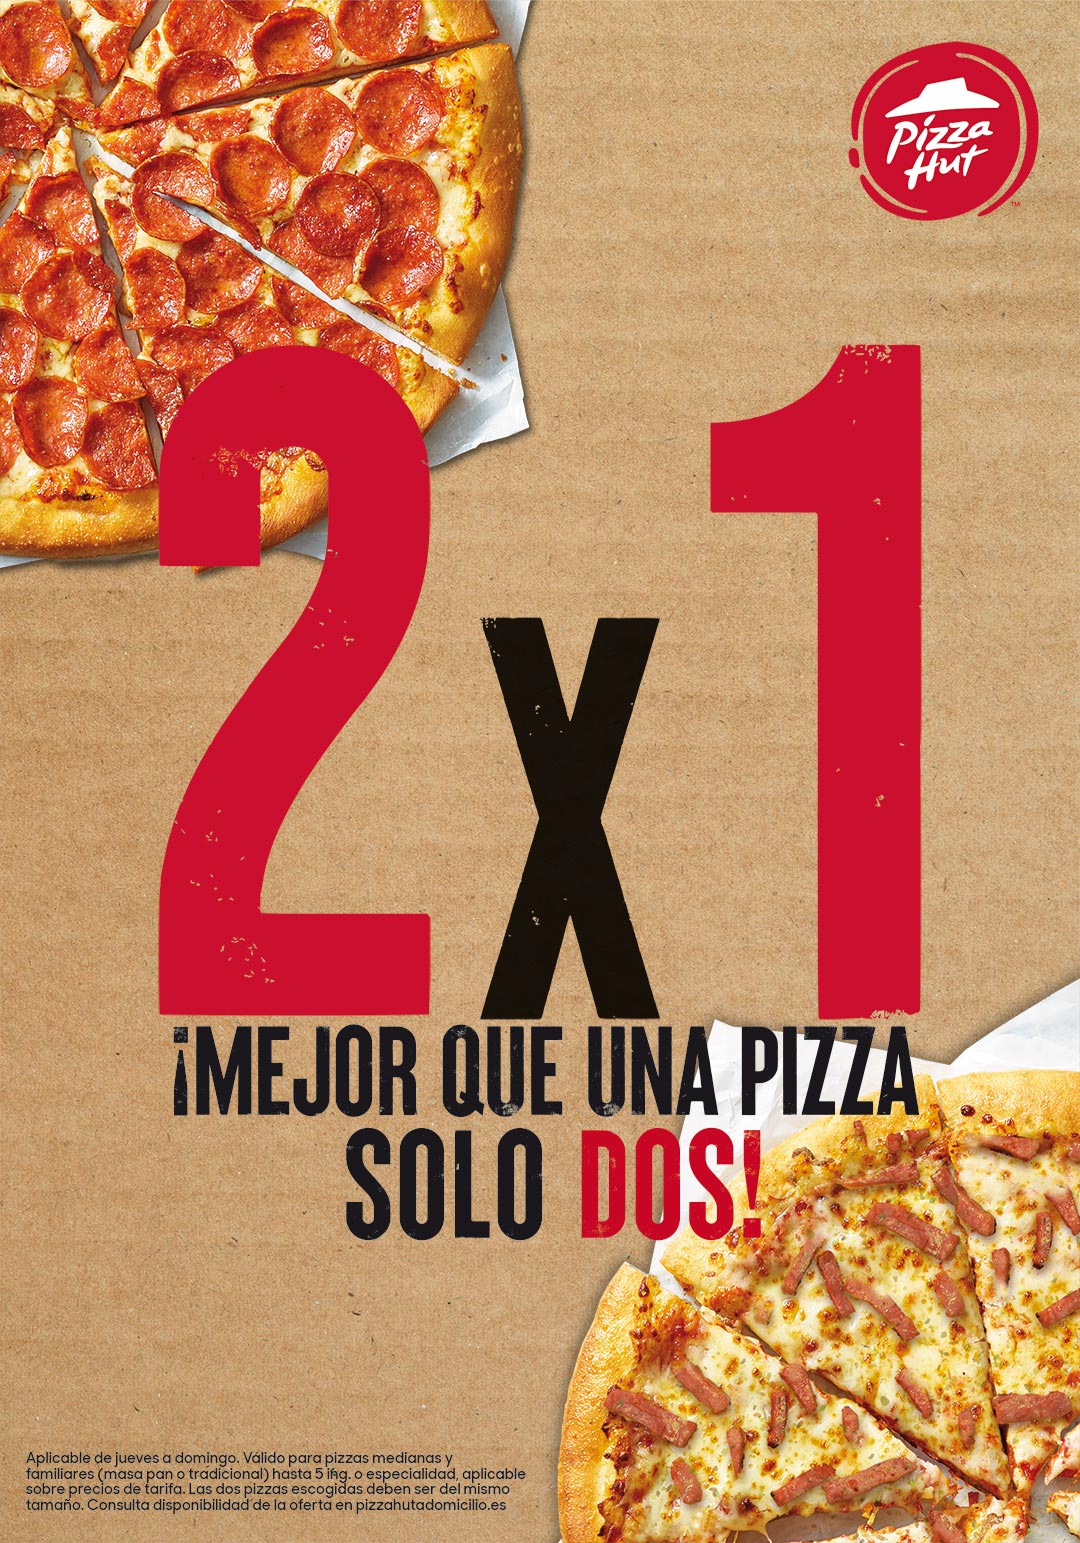 2x1 !Mejor que una Pizza solo dos! Pizza Hut